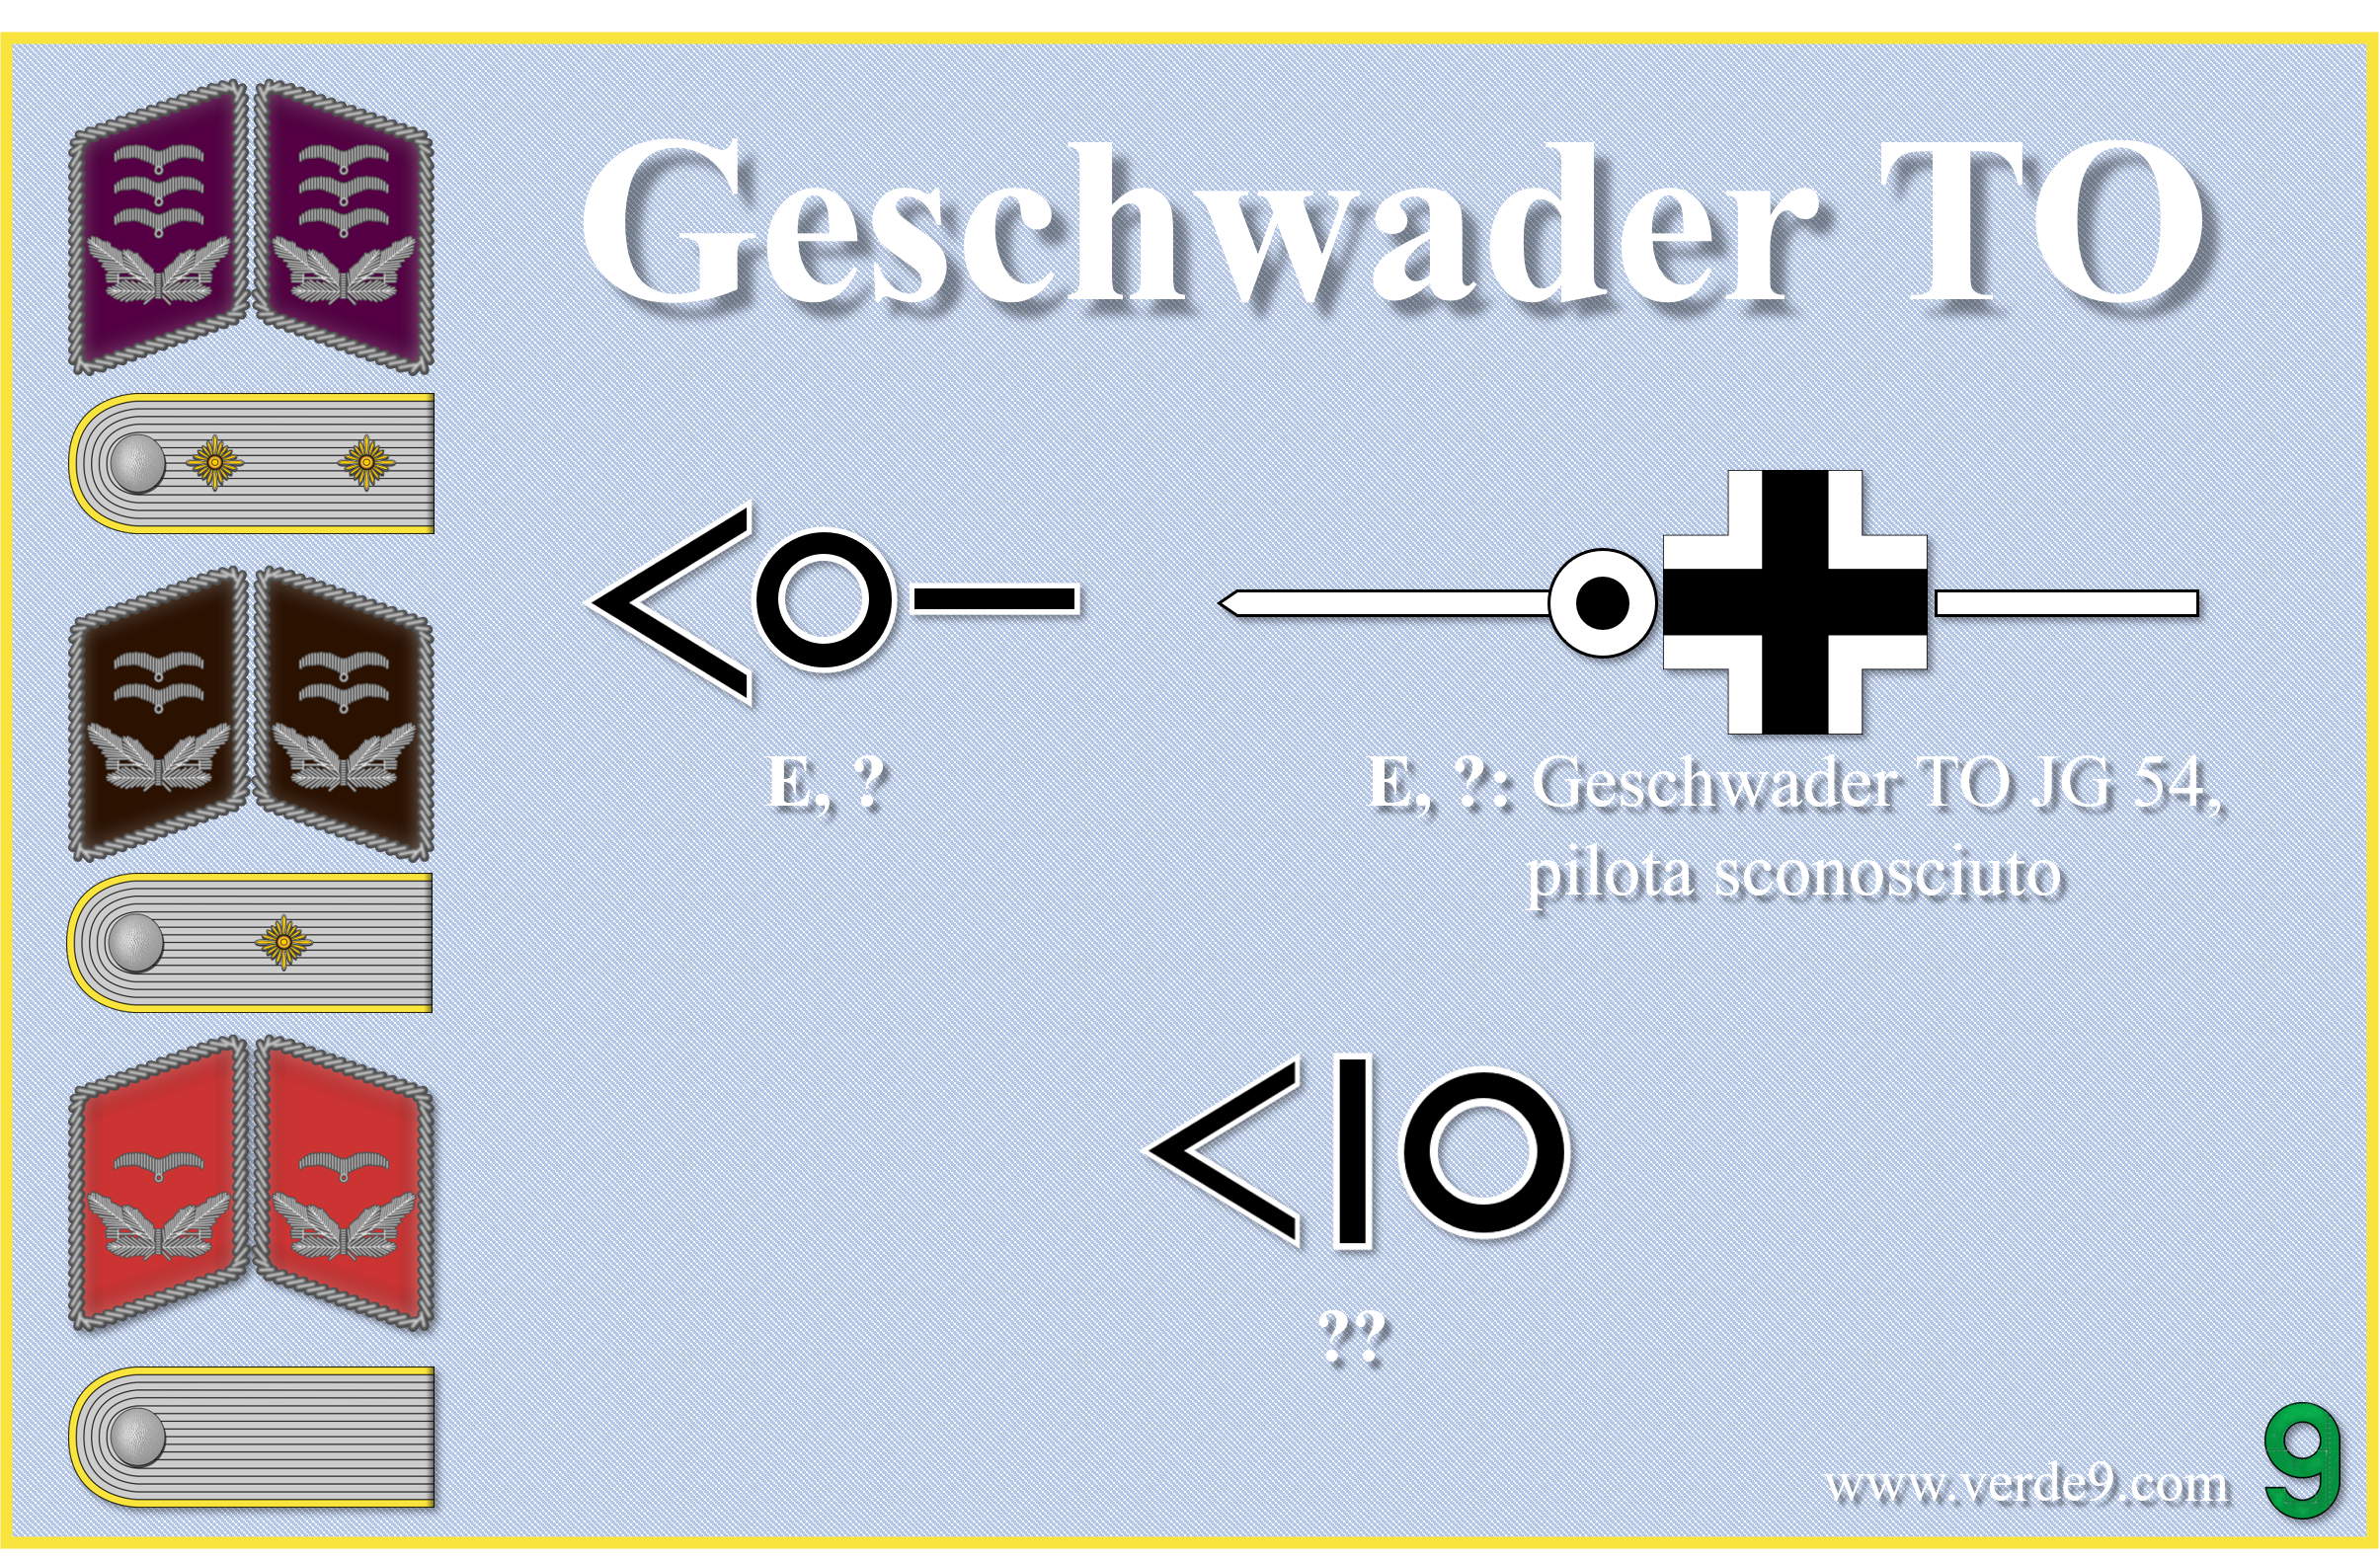 Simboli identificativi del Geschwader TO della Luftwaffe